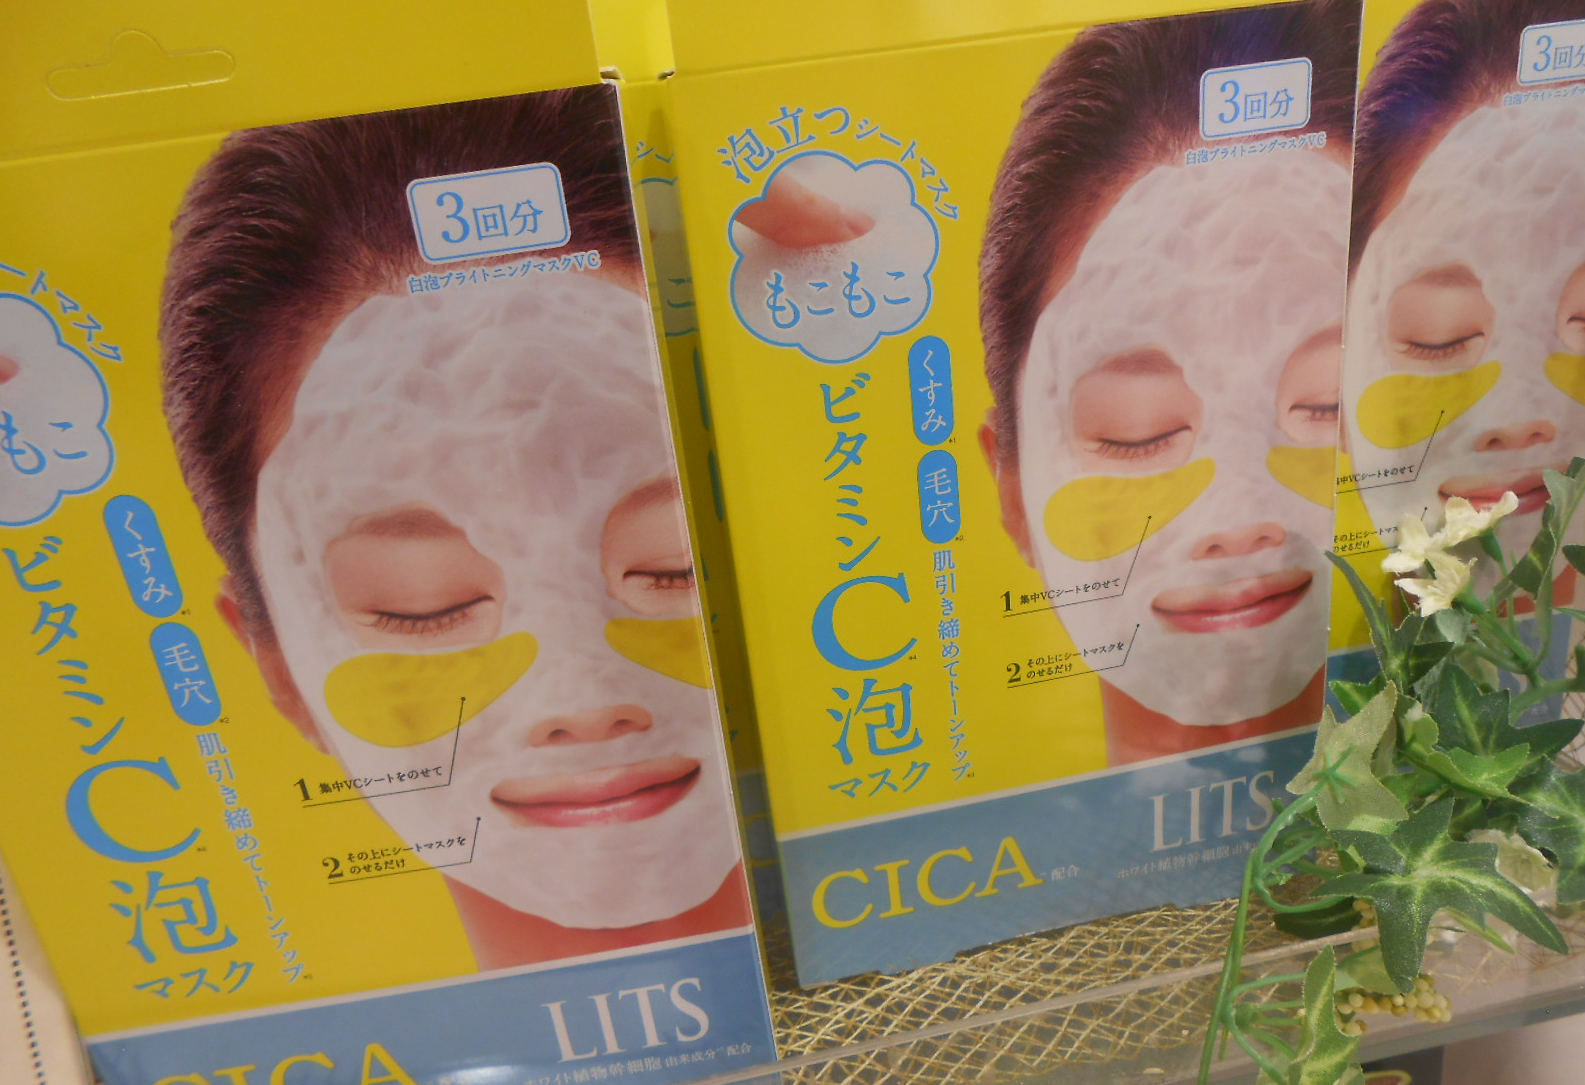 【LITS】トリプルビタミンC配合のもこもこ泡マスク | ディアモール大阪店 | SHOP BLOG | ショップイン - shop in -